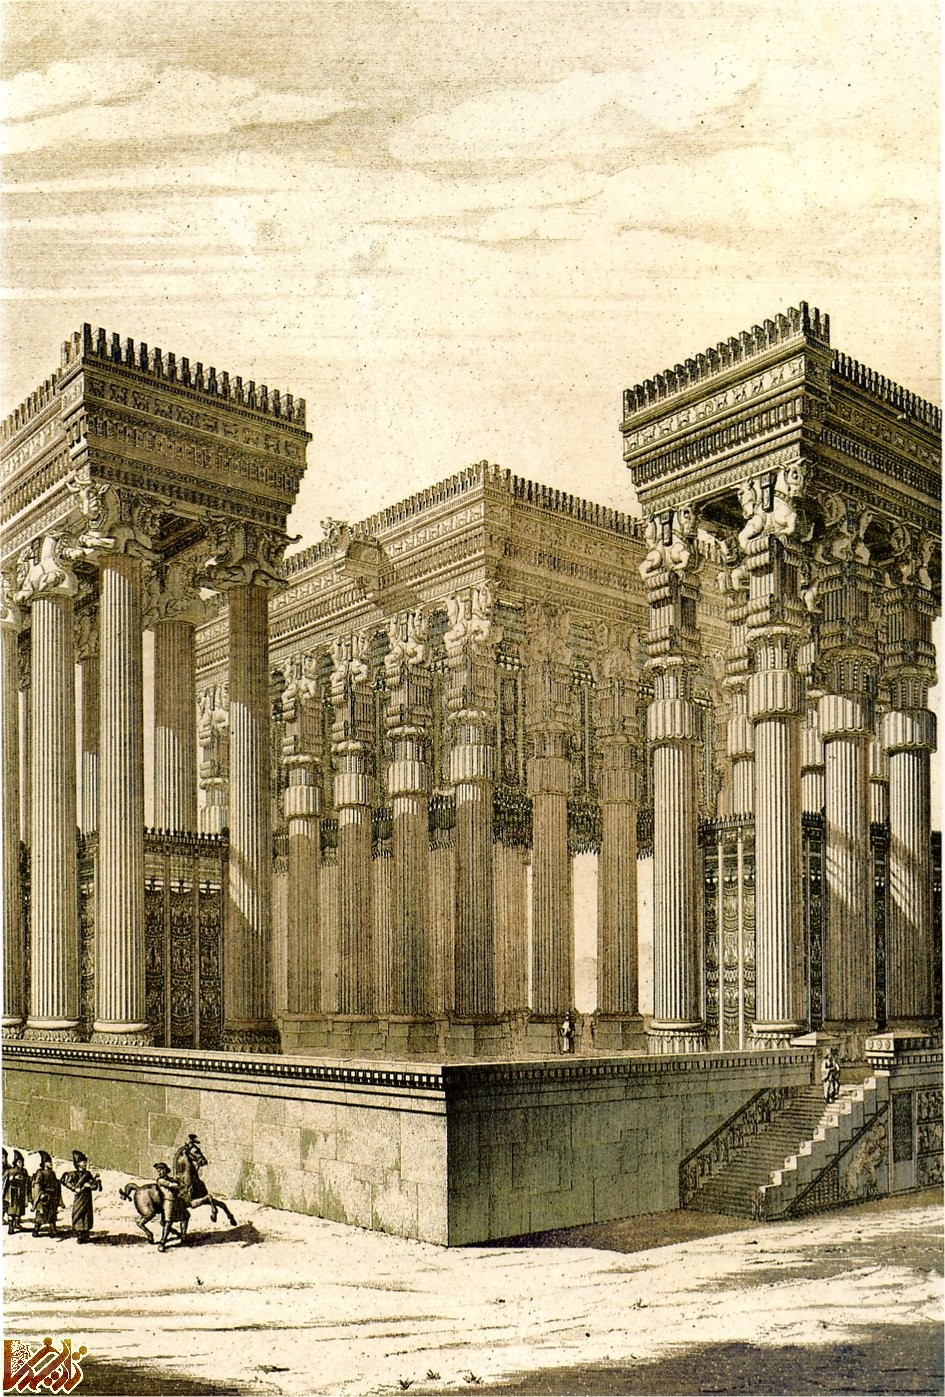 http://tarikhema.org/images/2011/08/Persepolis_Reconstruction_Apadana_Chipiez2.jpg